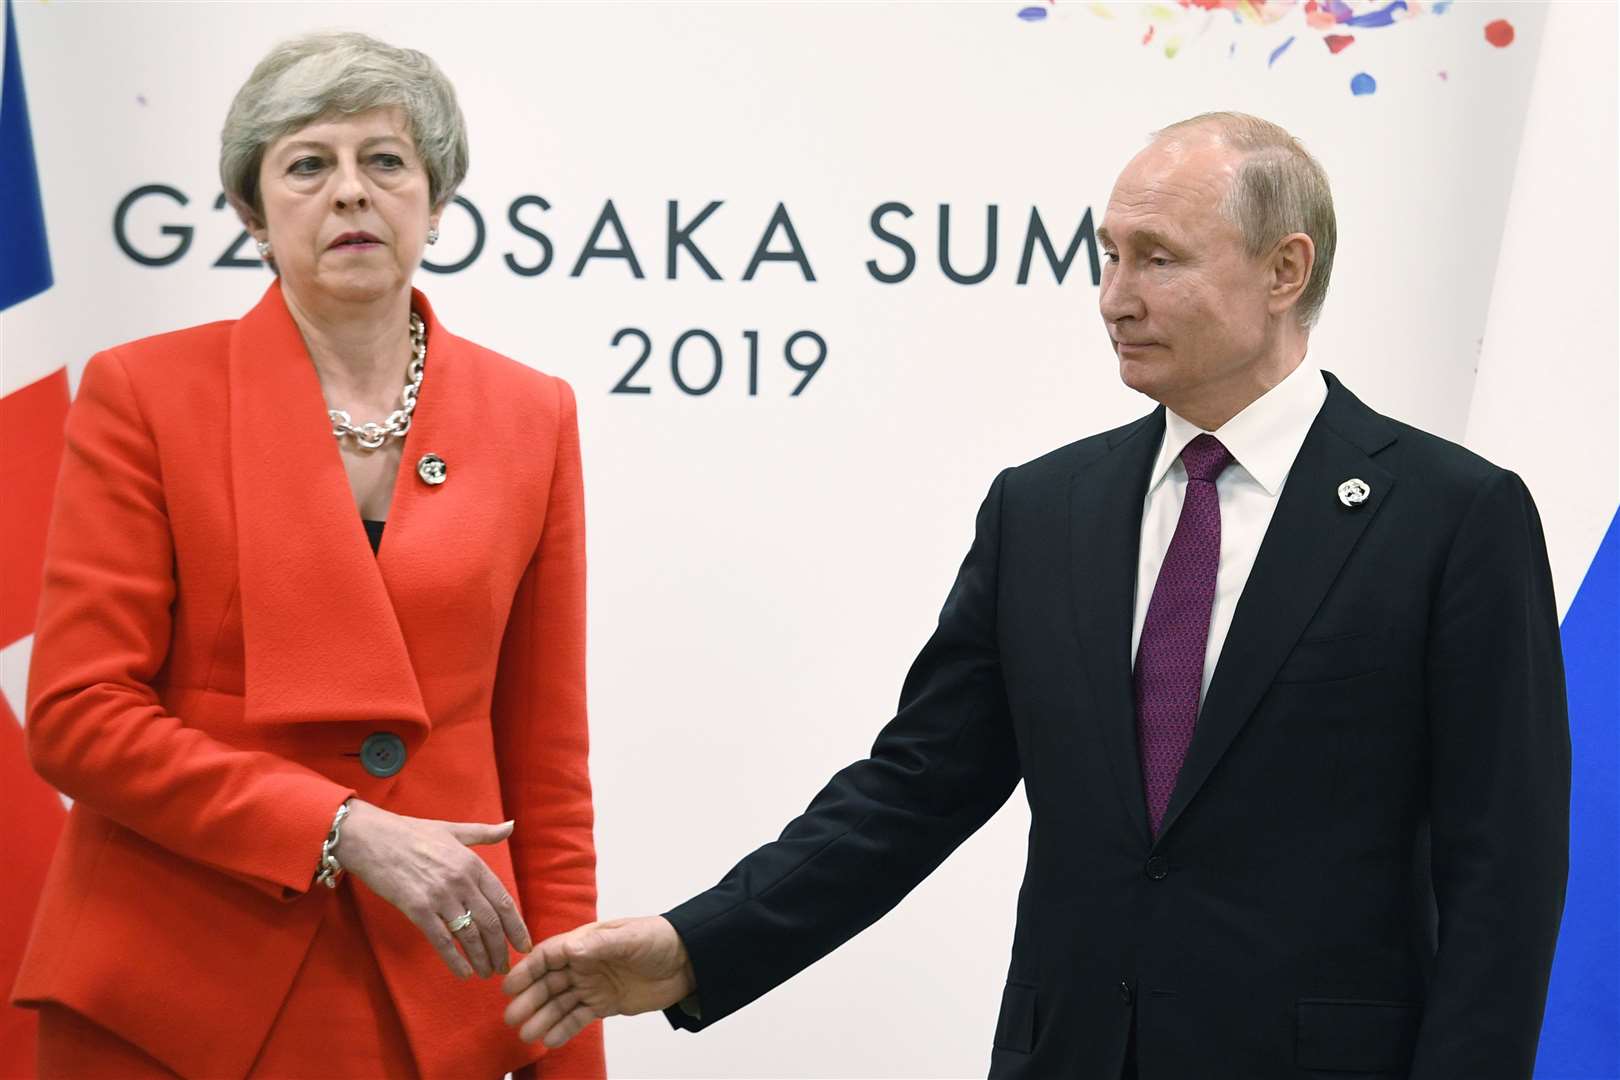 Russian President Vladimir Putin with former PM Theresa May